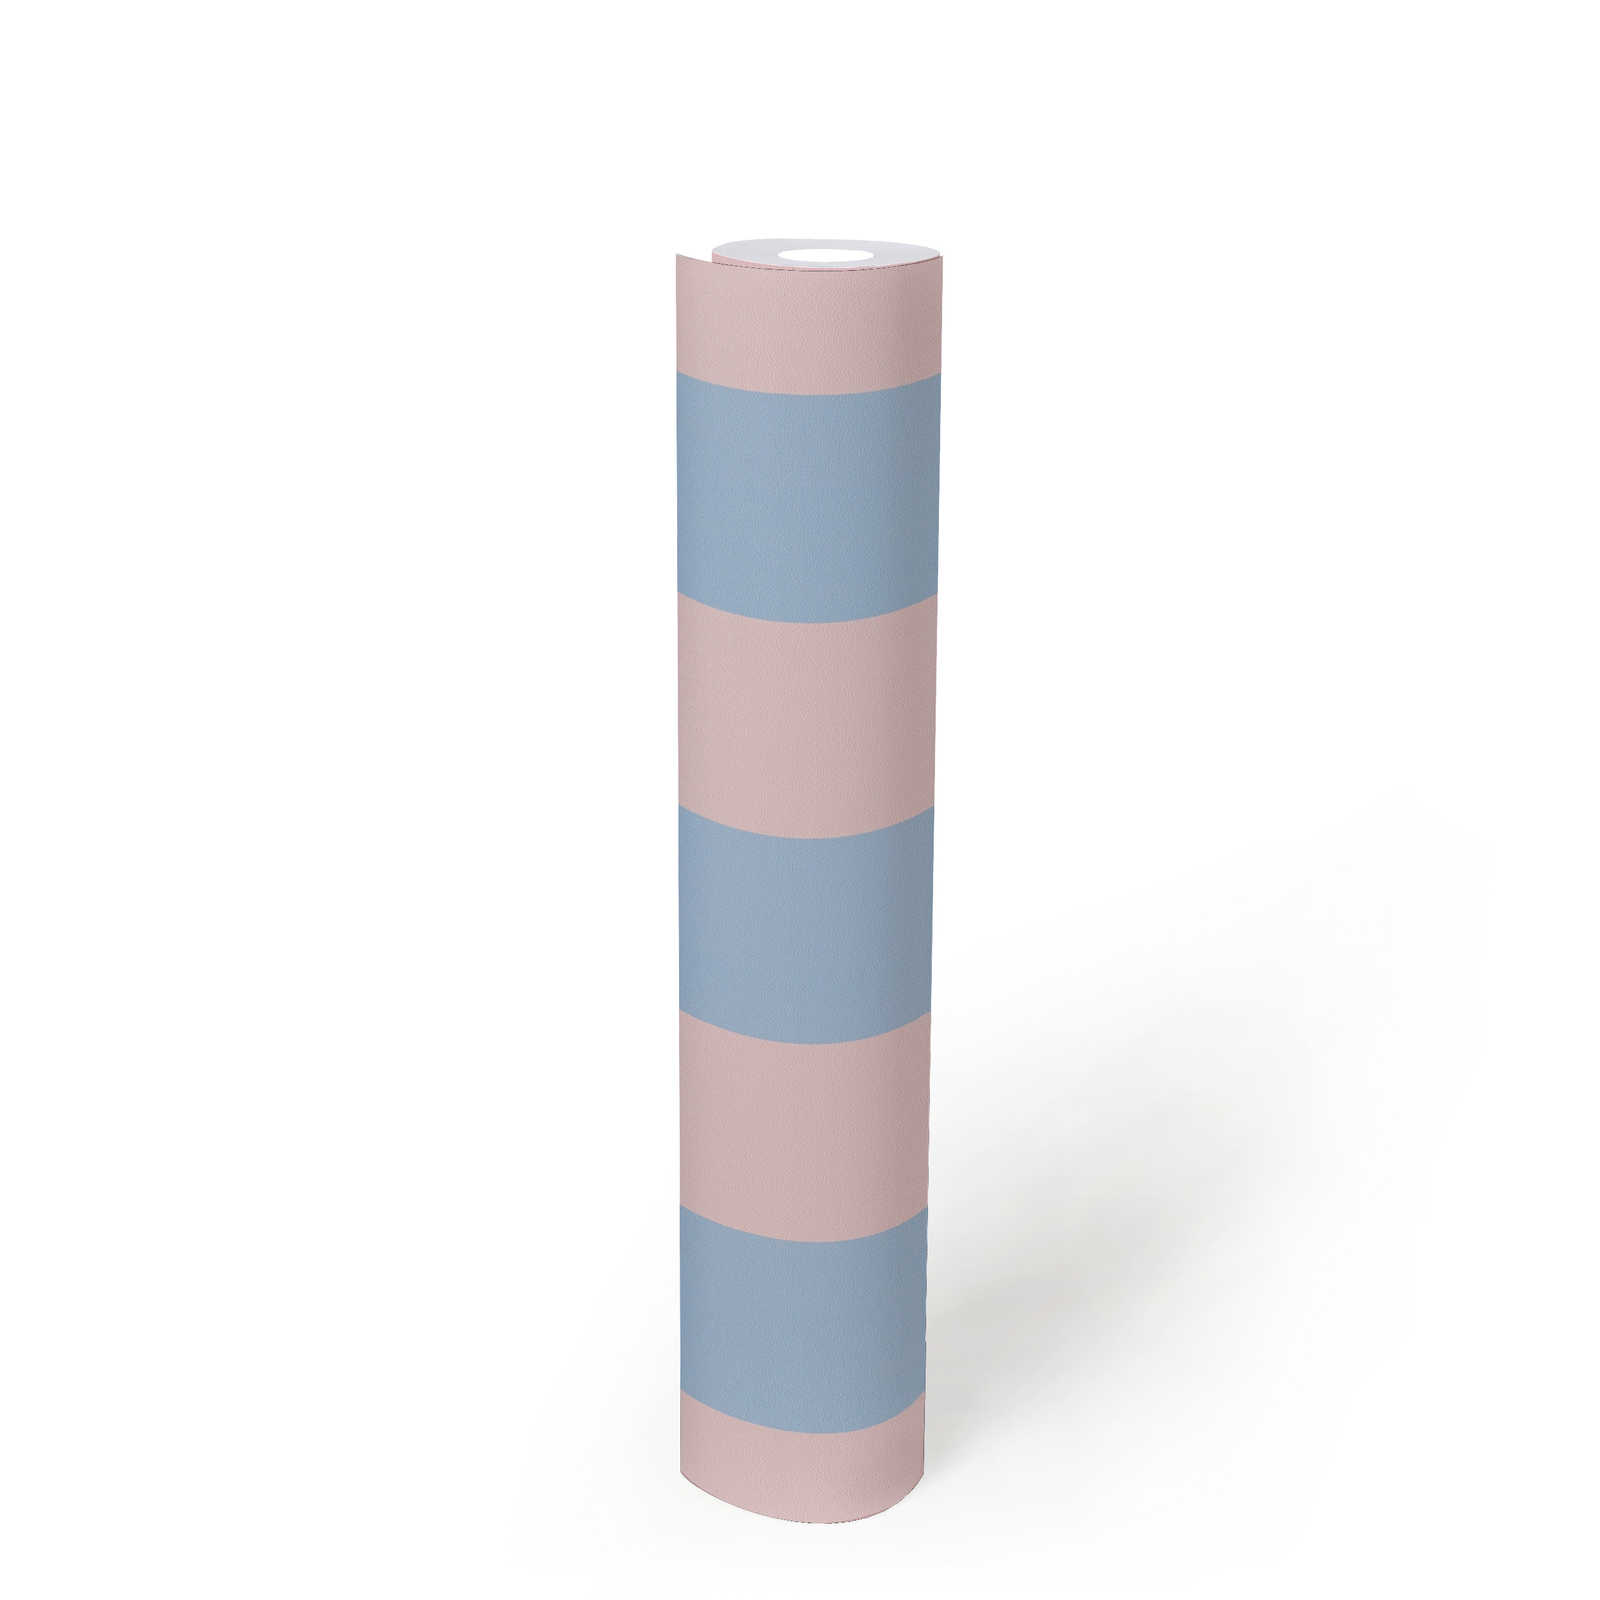             Carta da parati a righe con struttura leggera - blu, rosa
        